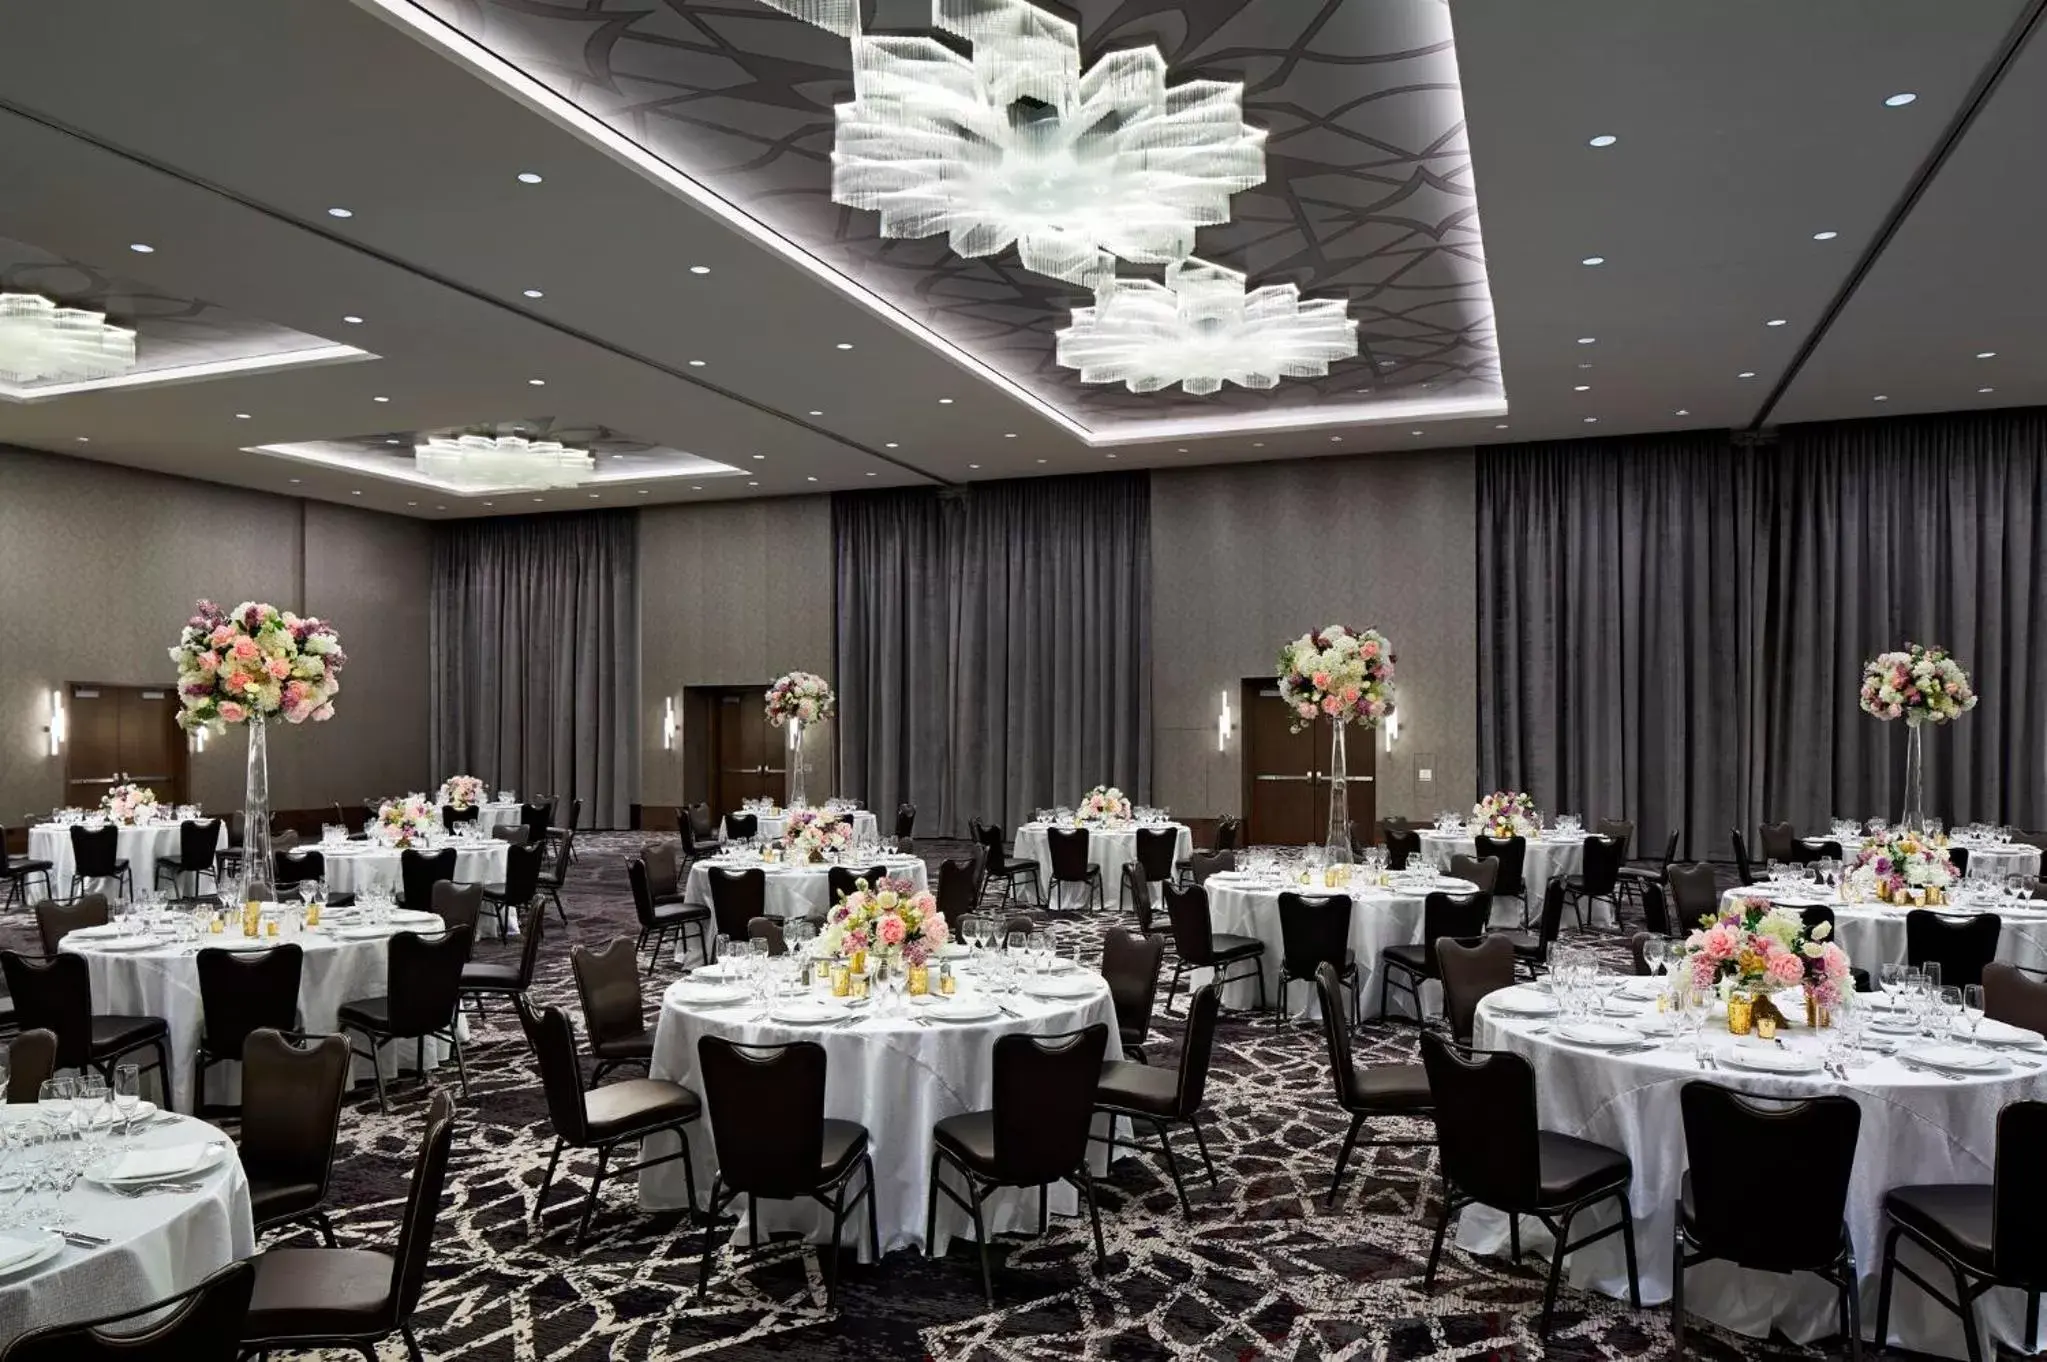 Banquet/Function facilities, Banquet Facilities in Loews Chicago Hotel